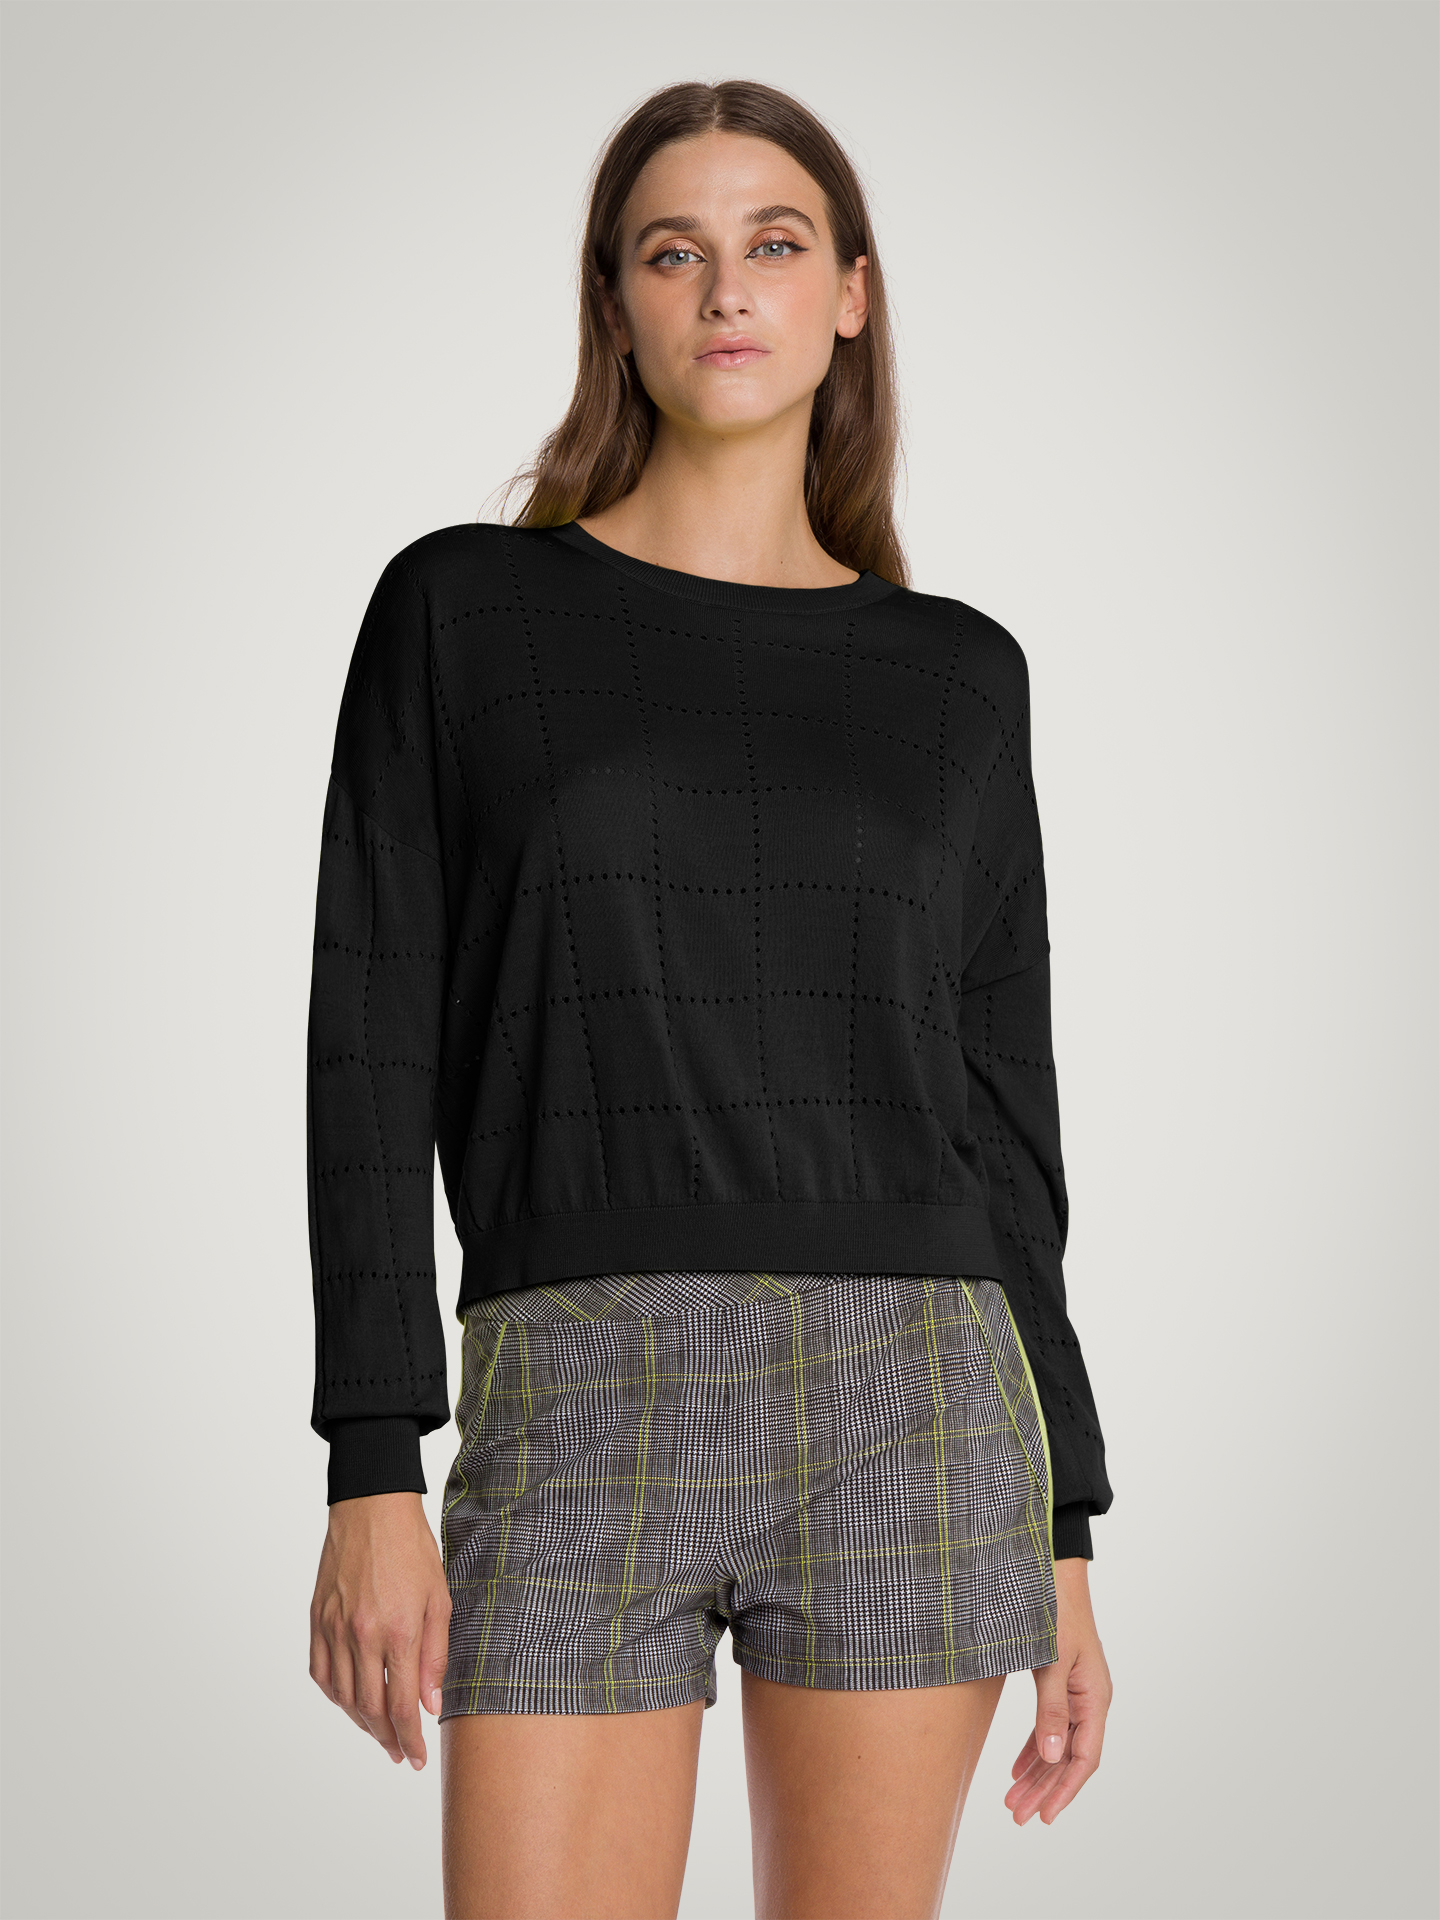 Wolford - Summer Knit Top Long Sleeves, Frau, black, Größe: S günstig online kaufen